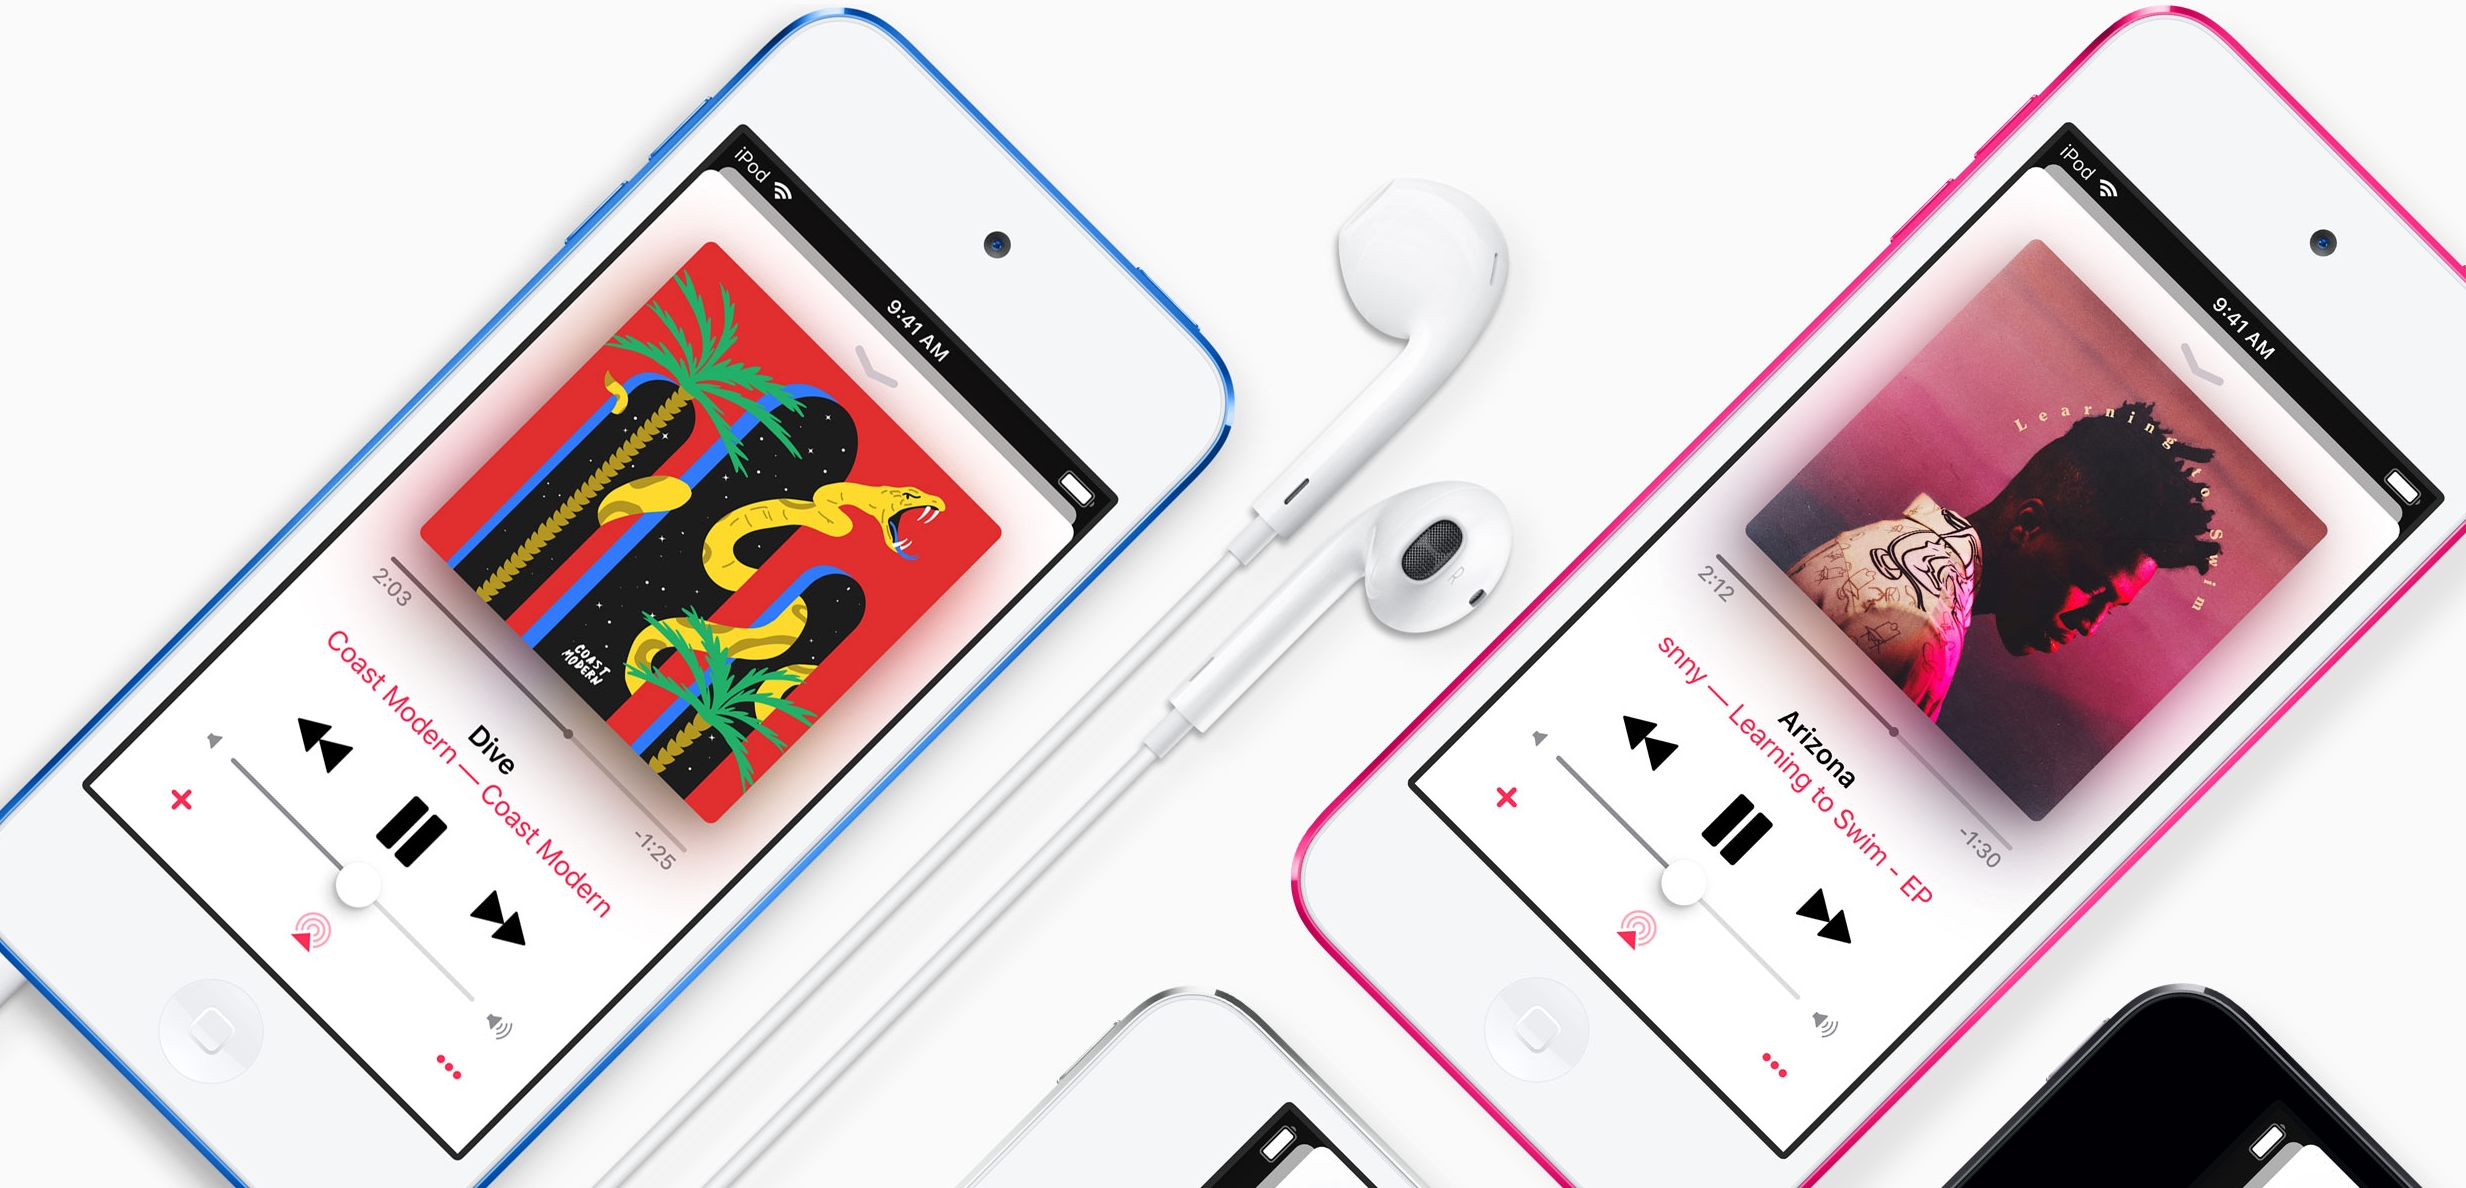 Apples lanserings-bonanza: iPod Touch oppgraderes trolig i morgen